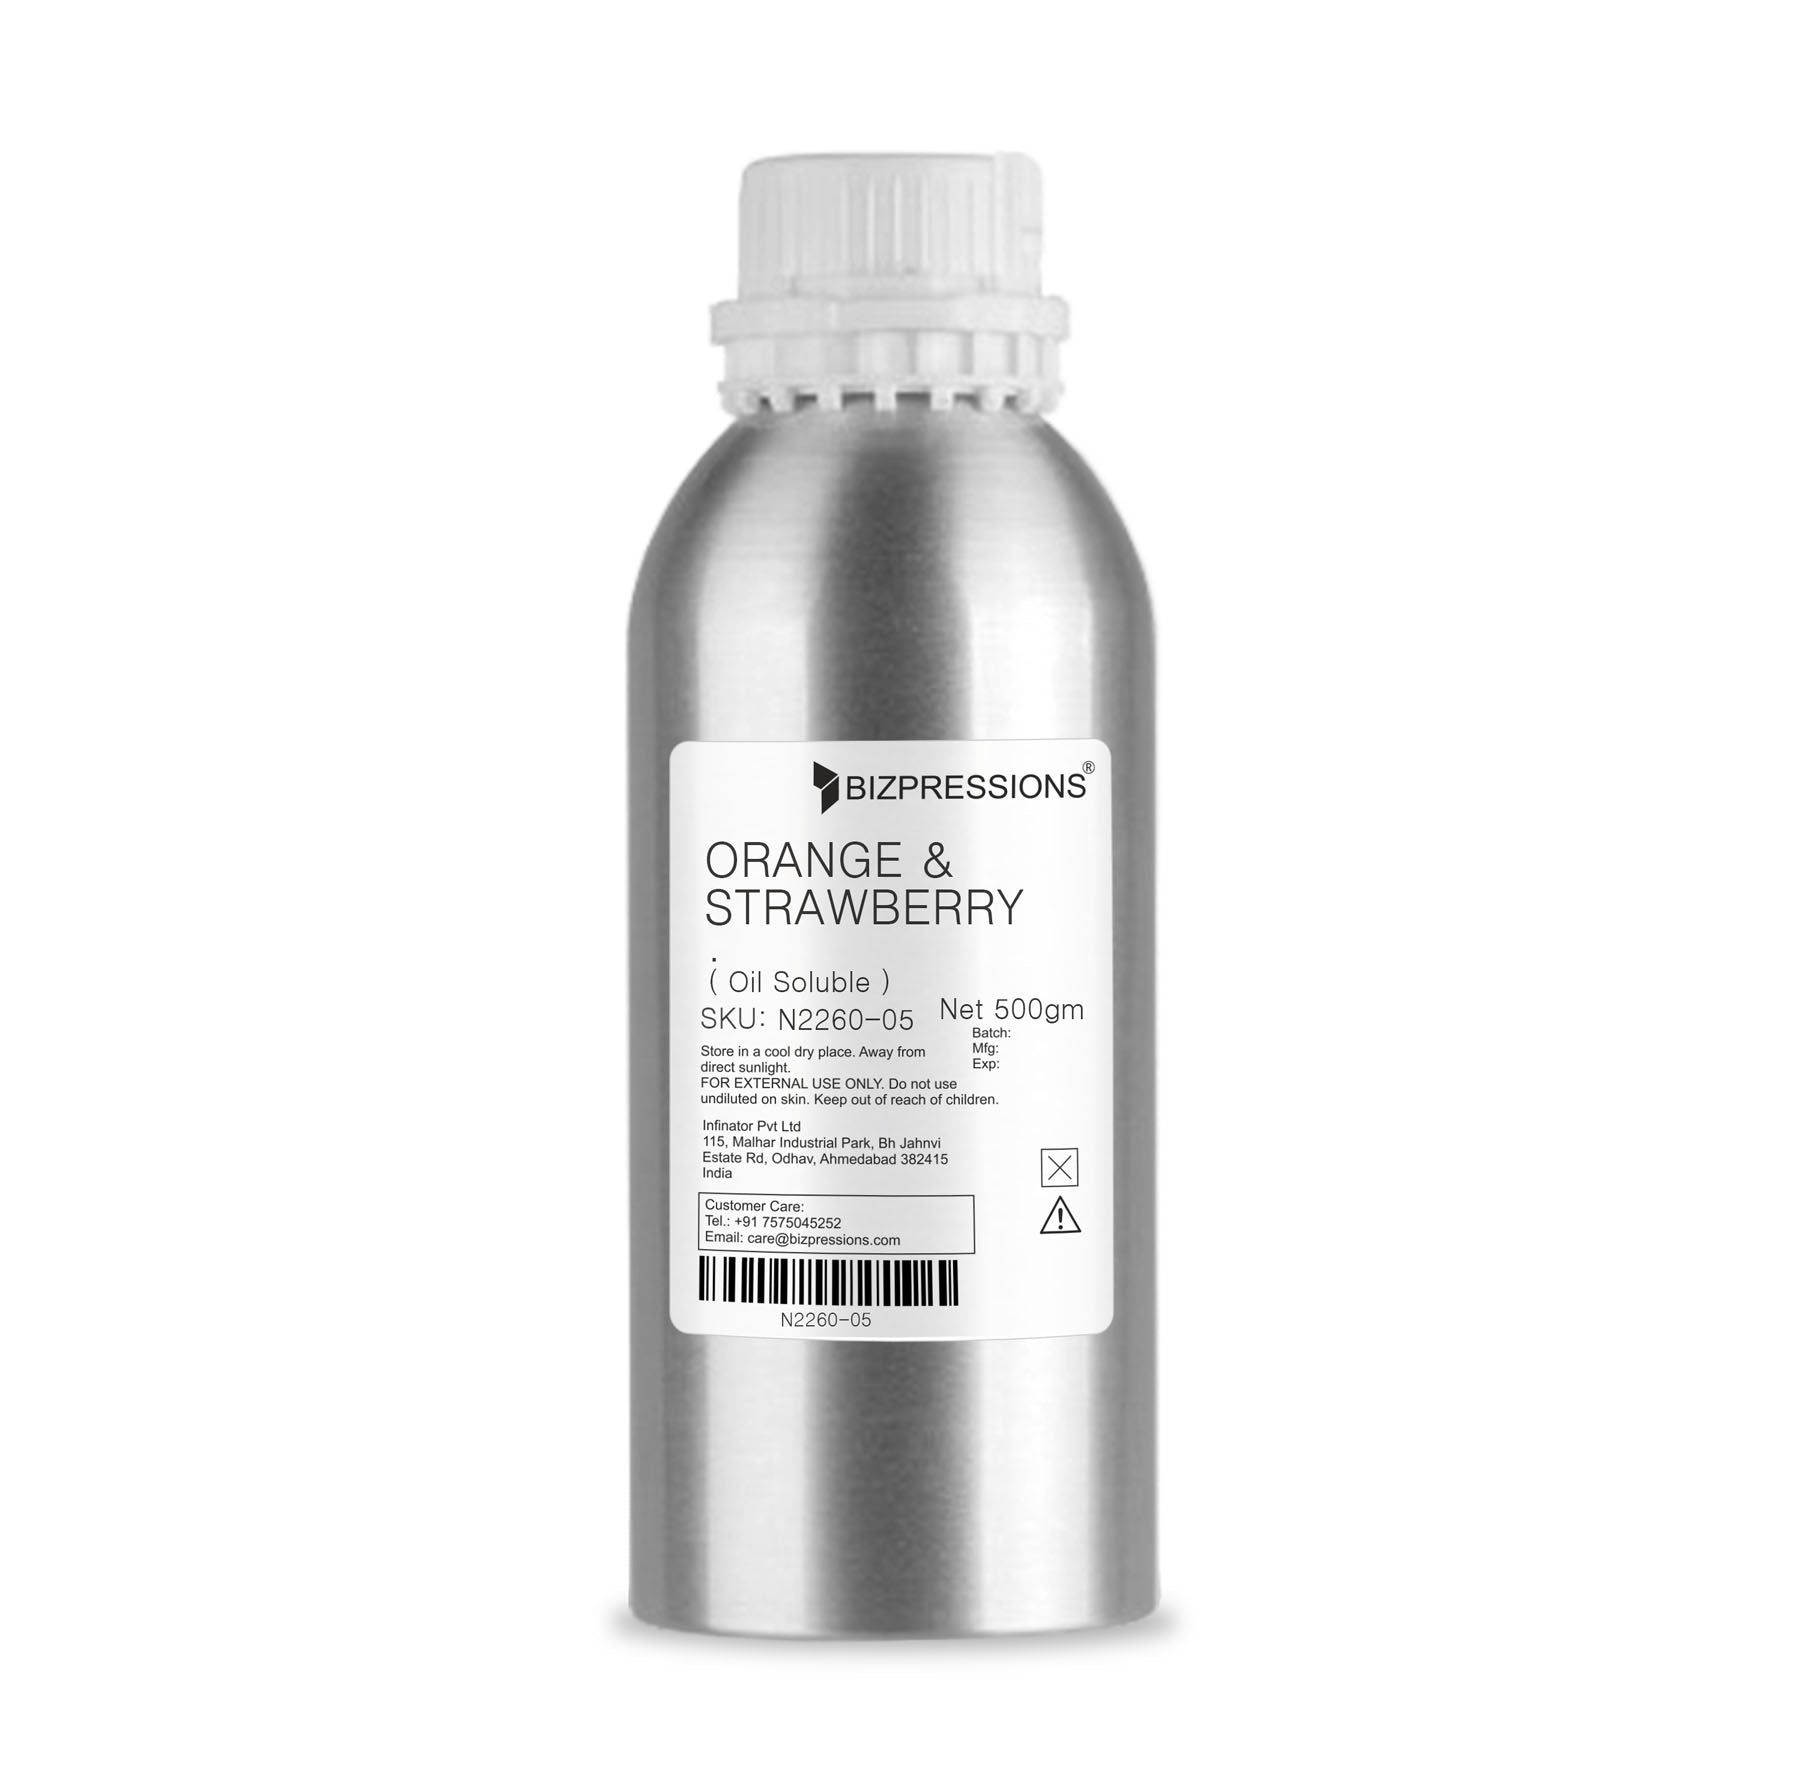 ORANGE & STRAWBERRY - Fragrance ( Oil Soluble ) - 500 gm